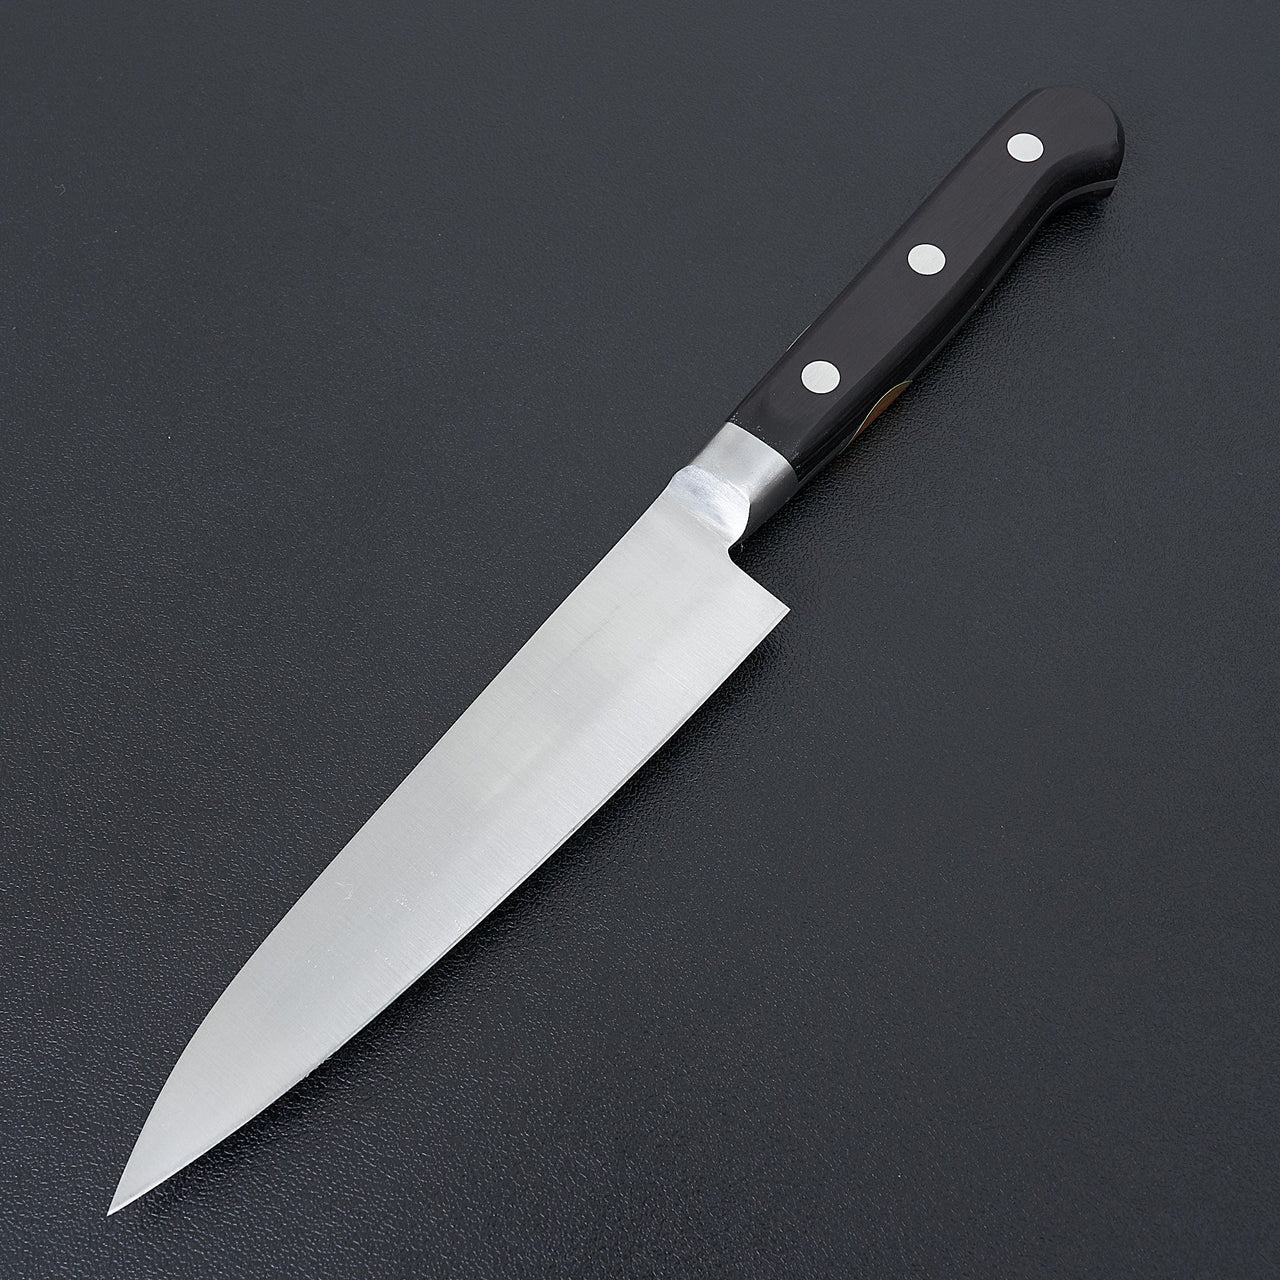 Sakai Kikumori Nihonko Carbon Petty 120mm-Knife-Sakai Kikumori-Carbon Knife Co